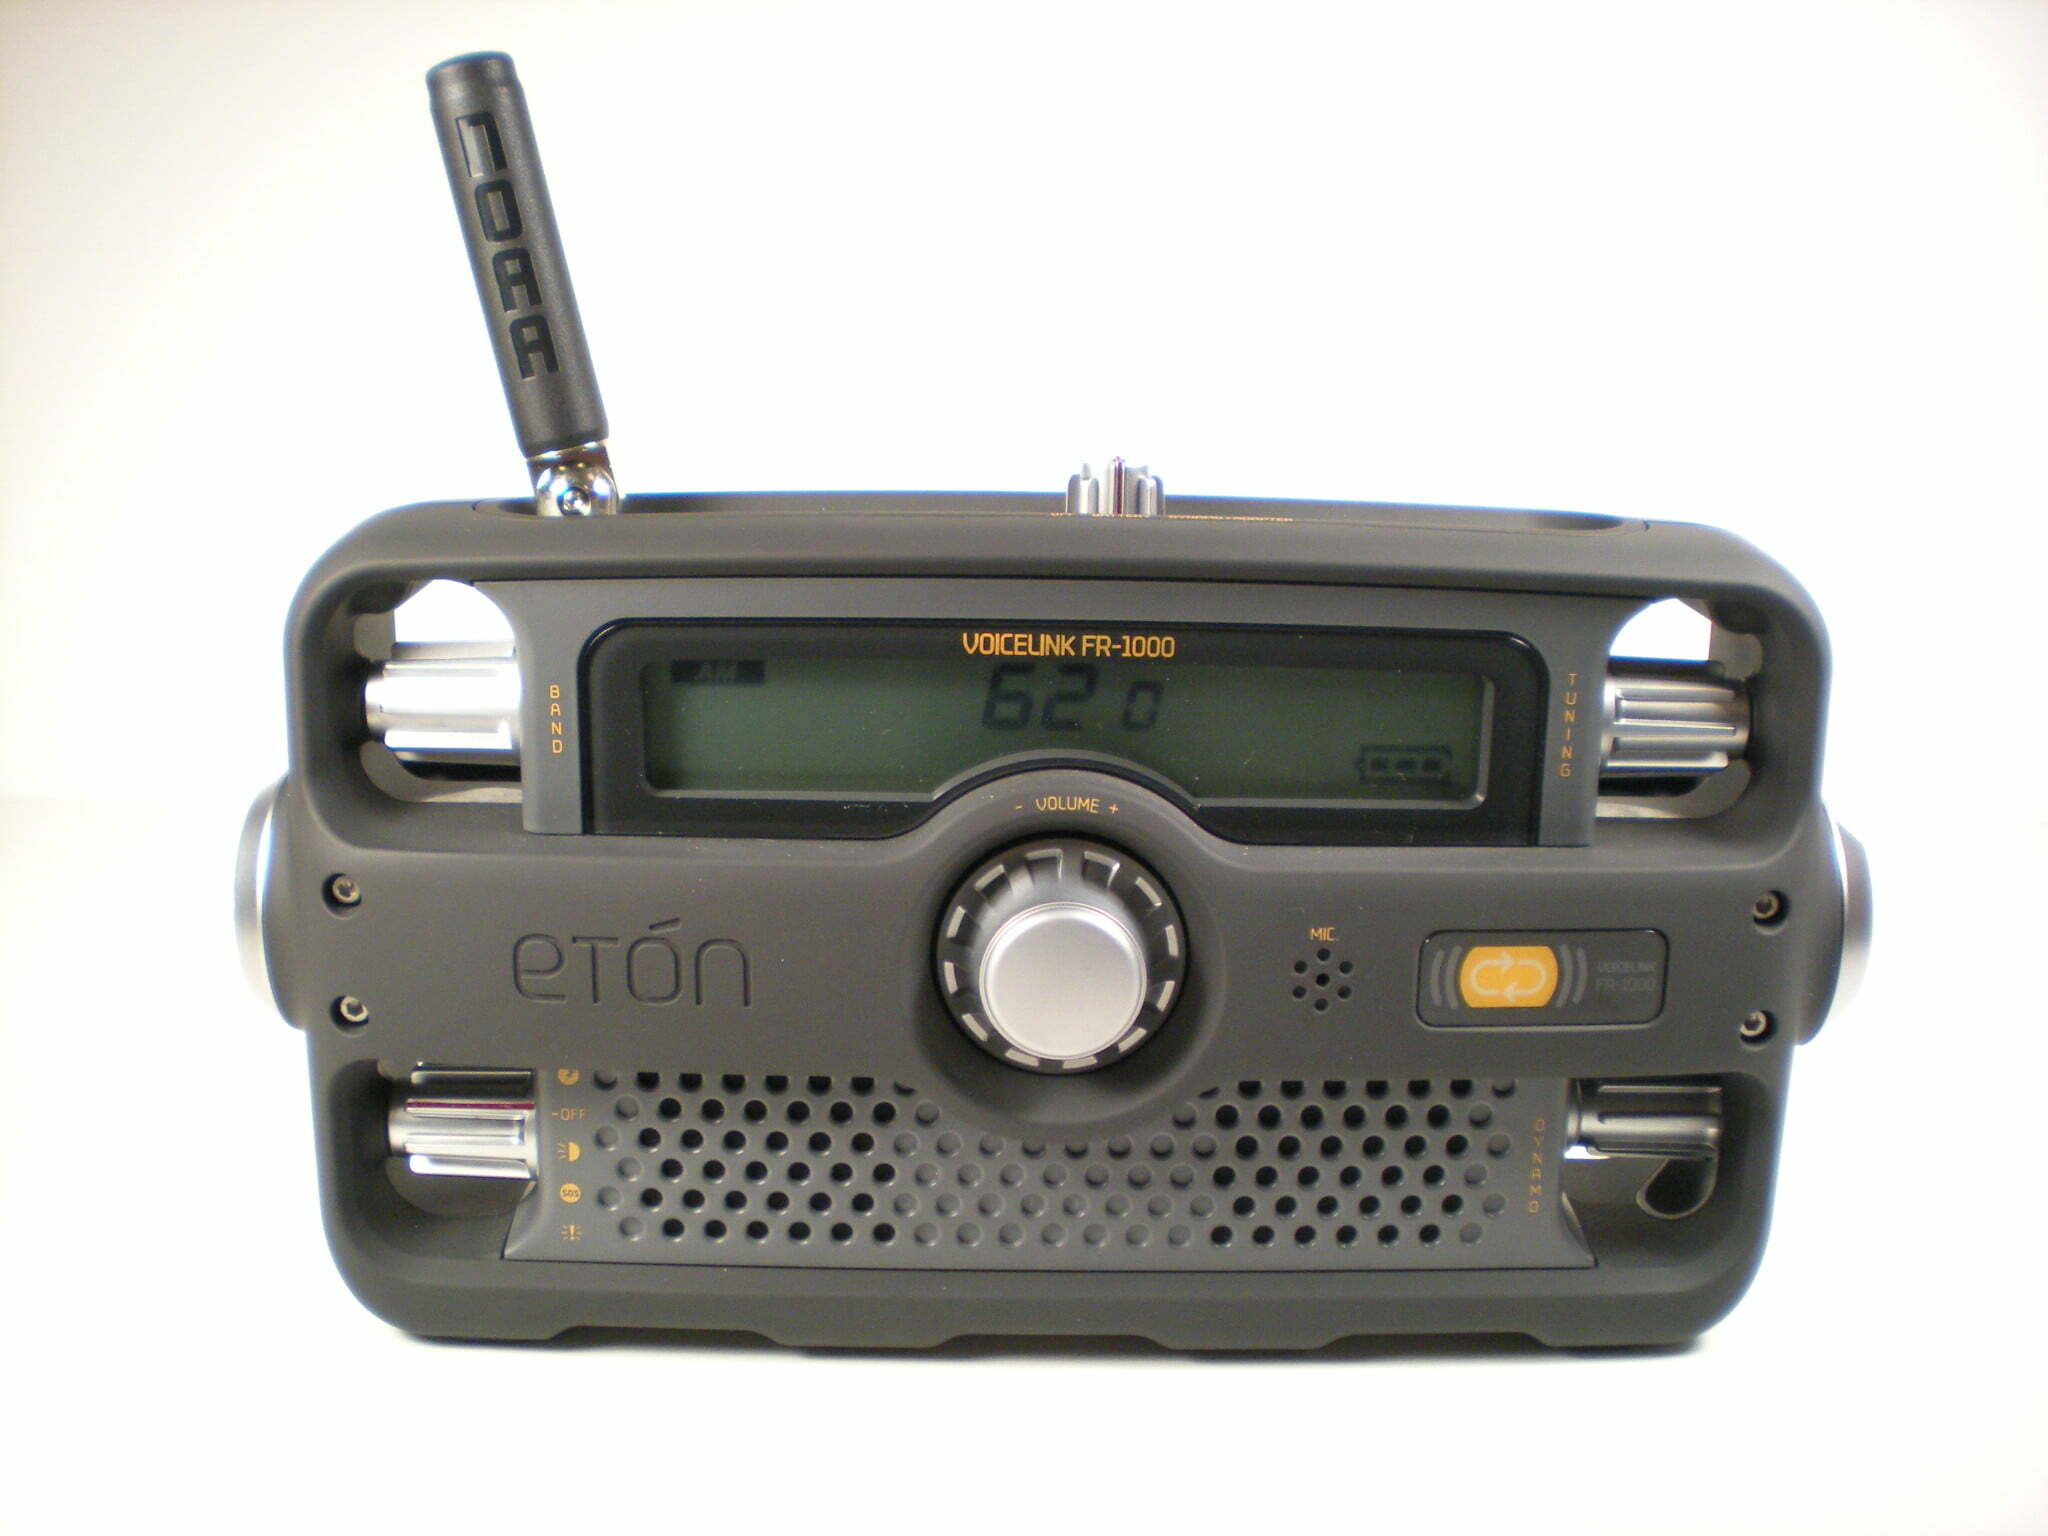 Gadget Review:  Eton FR-1000 VoiceLink Radio